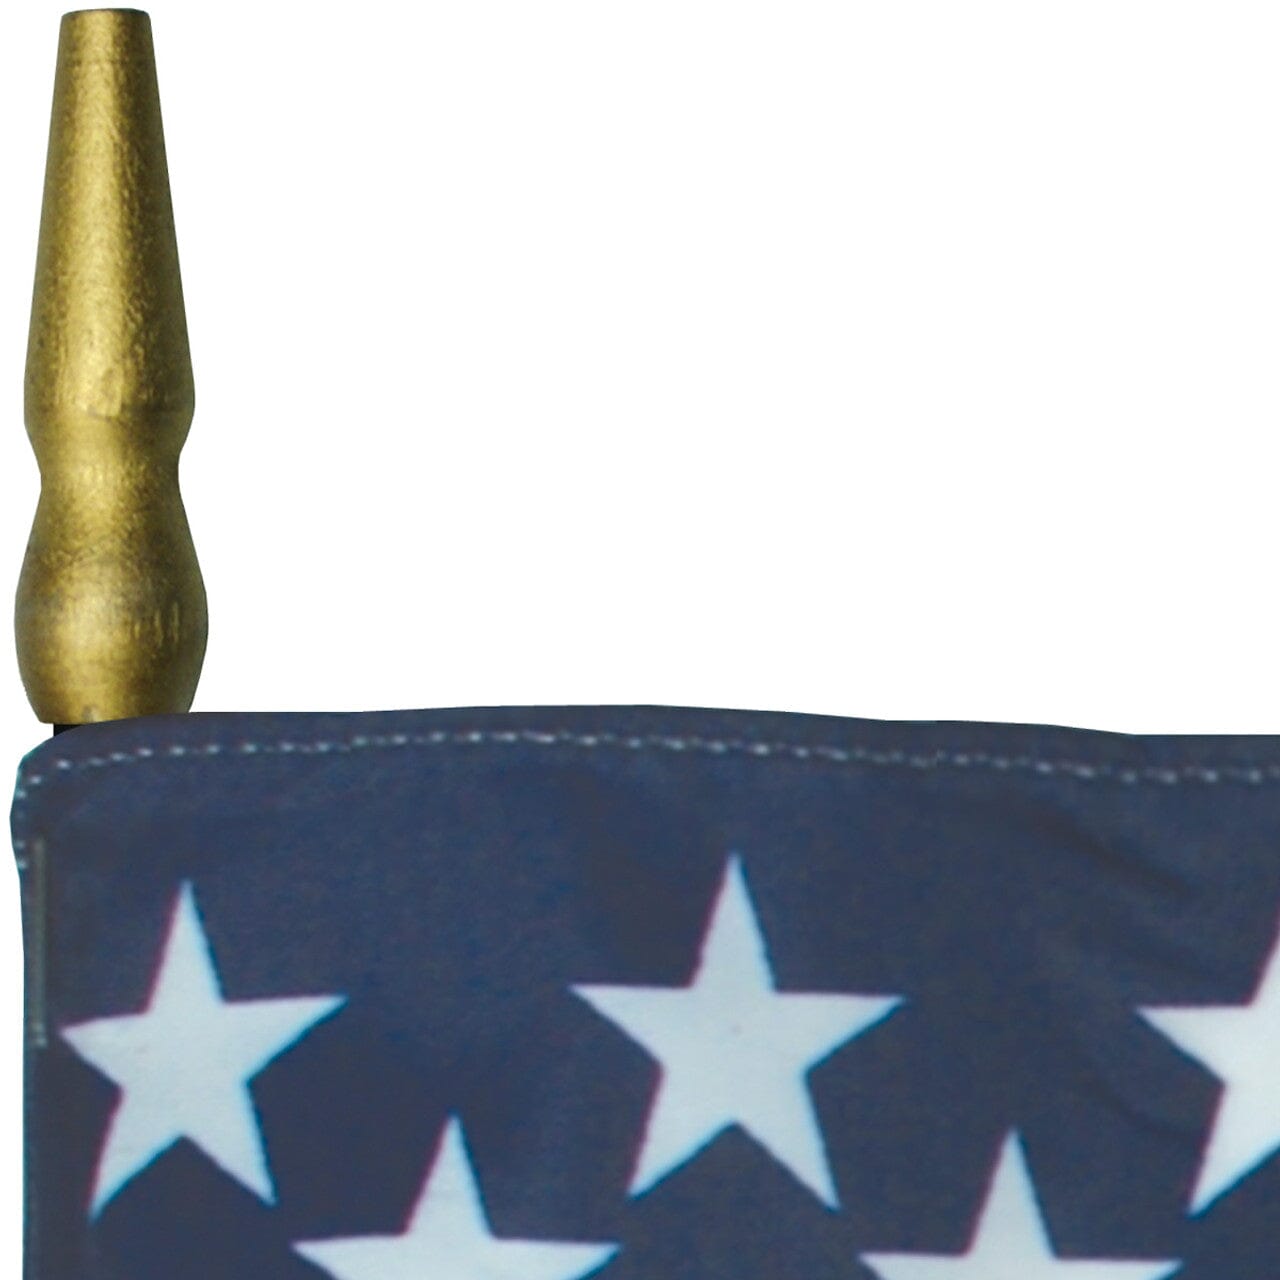 Premium 8" x 12" US Mini Flags | American Made | Bundle Options